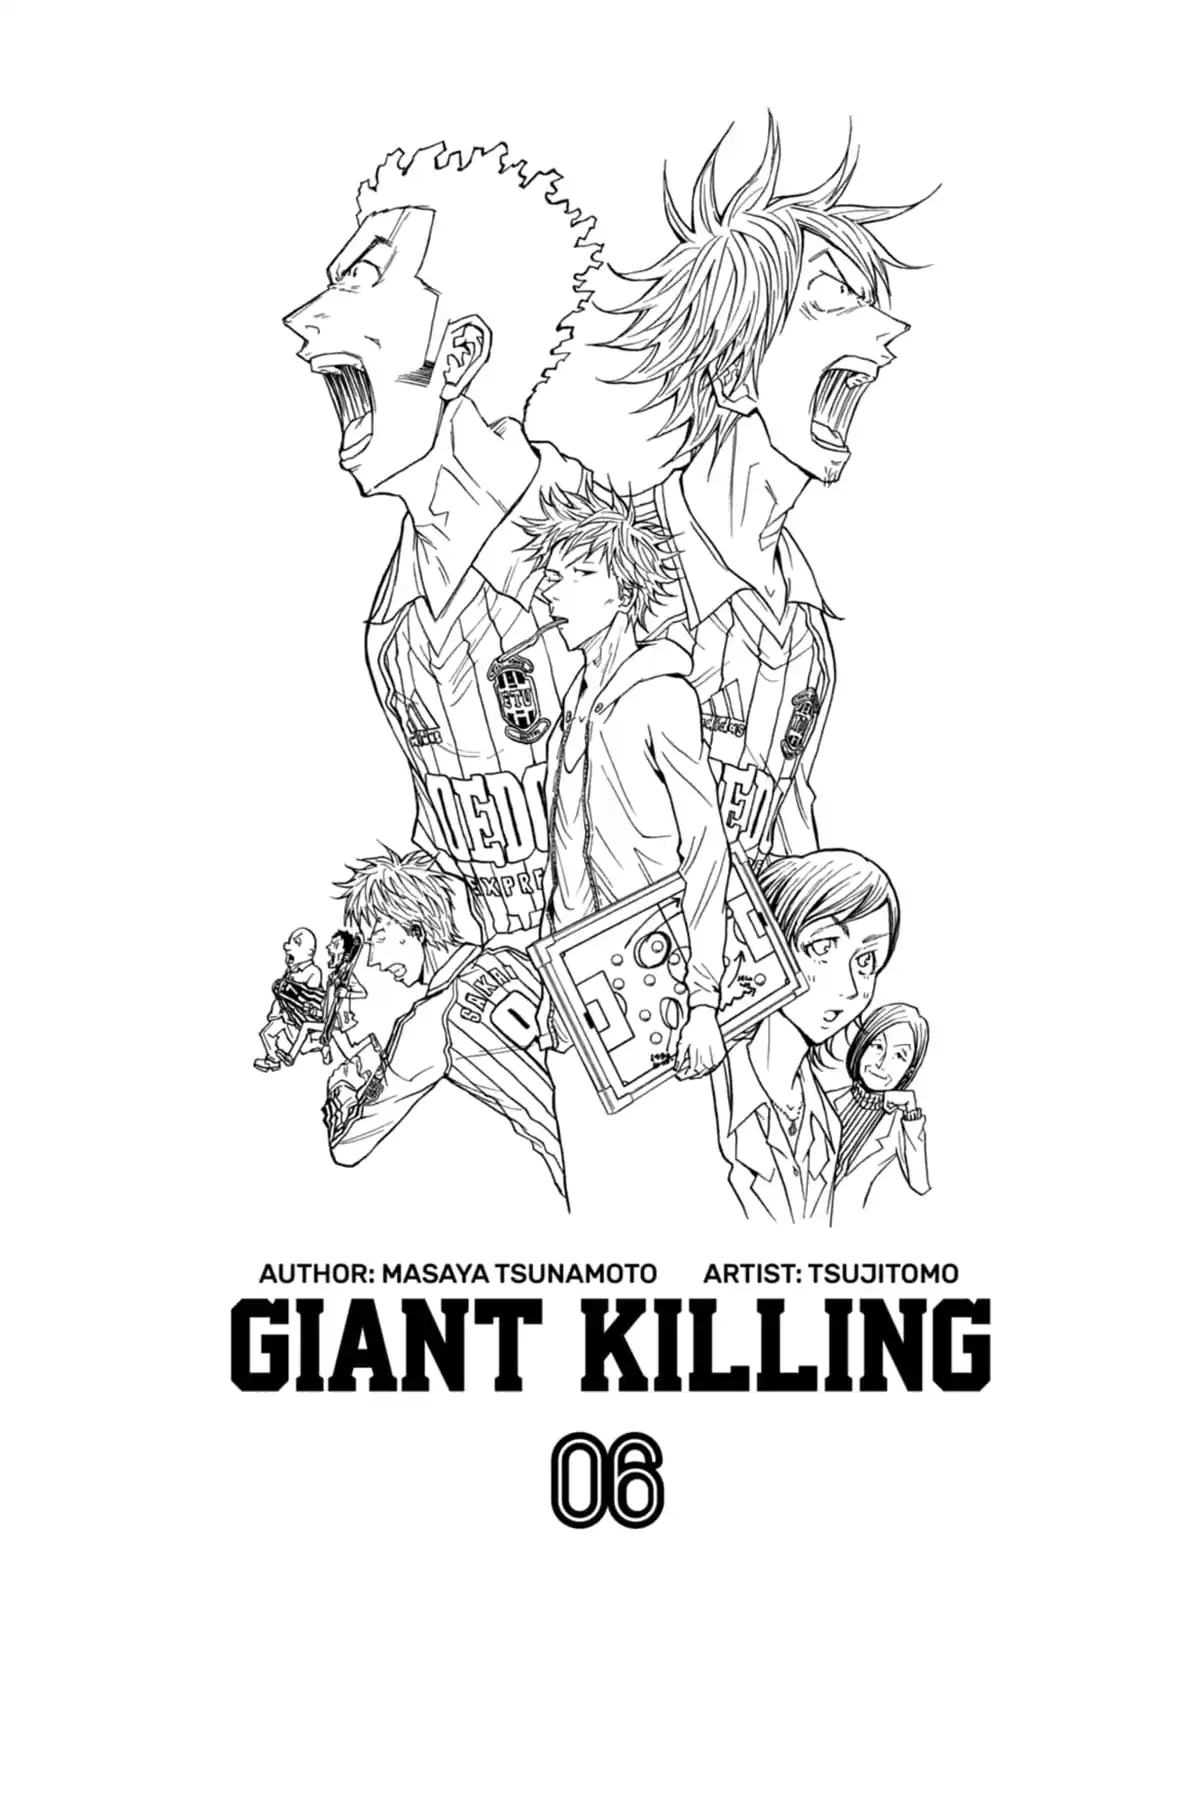 Giant killing baka